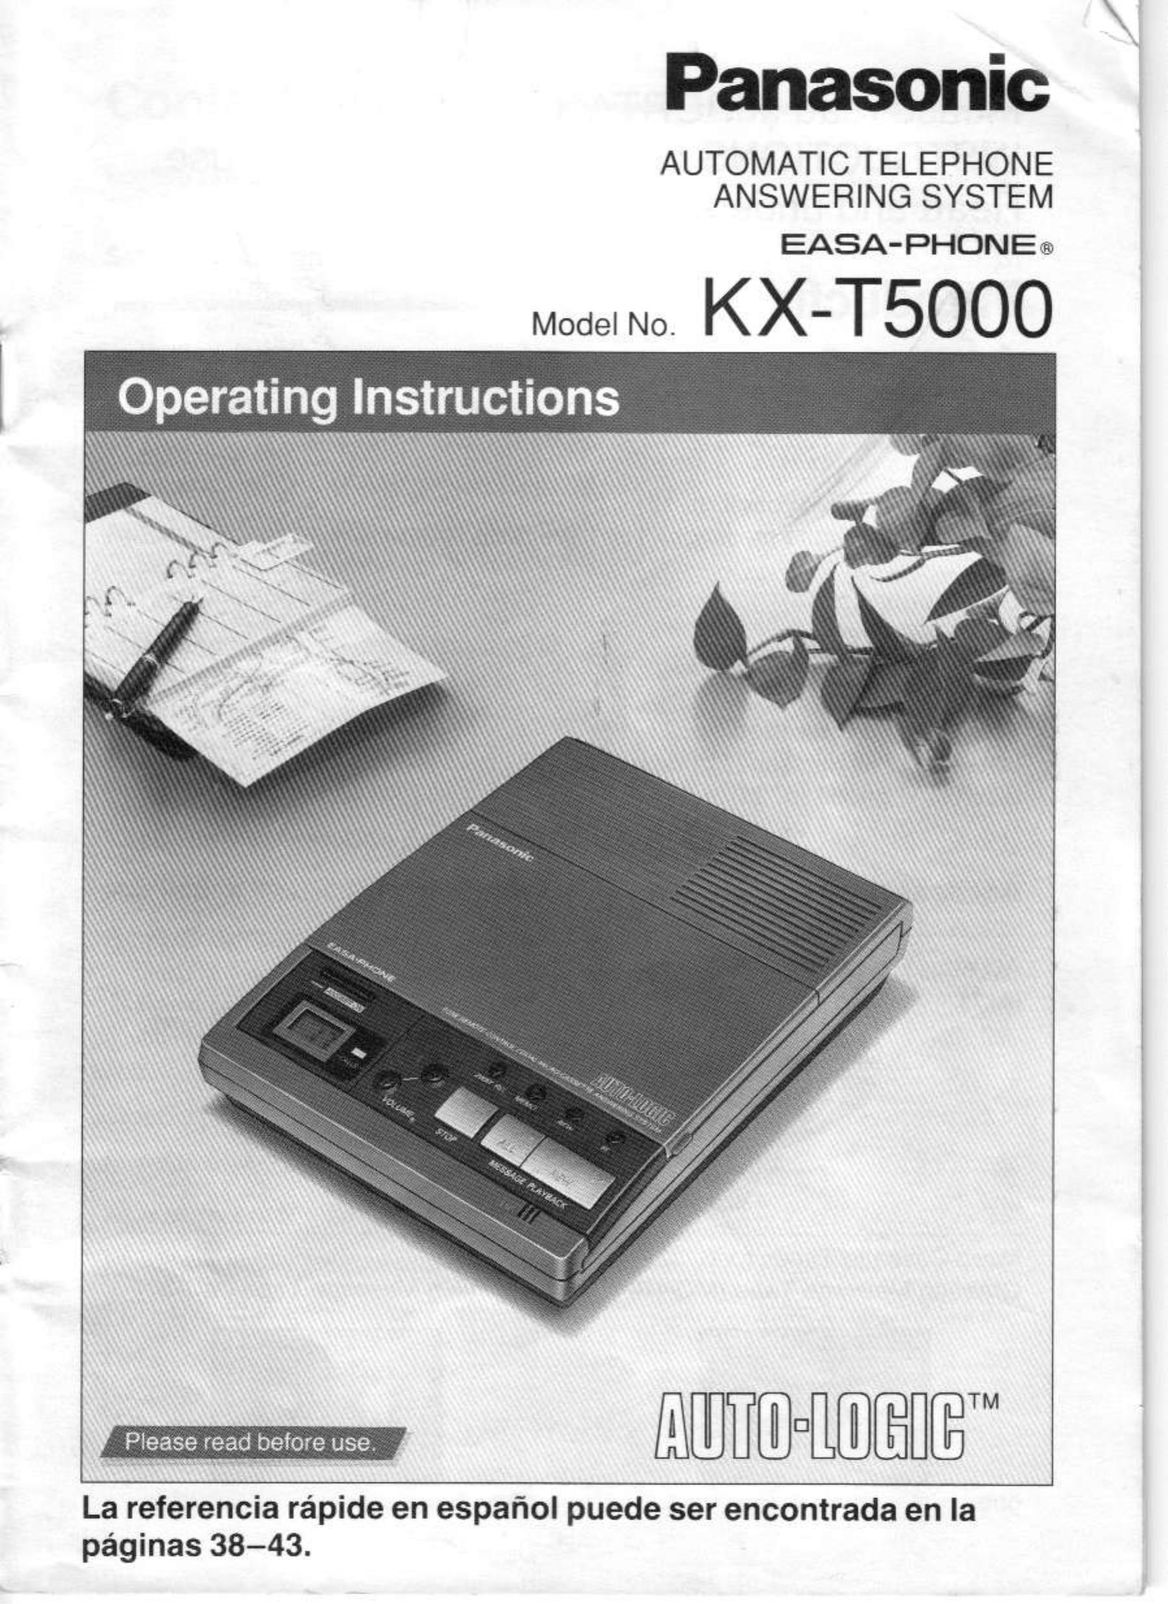 Panasonic KX-T5000 Answering Machine User Manual